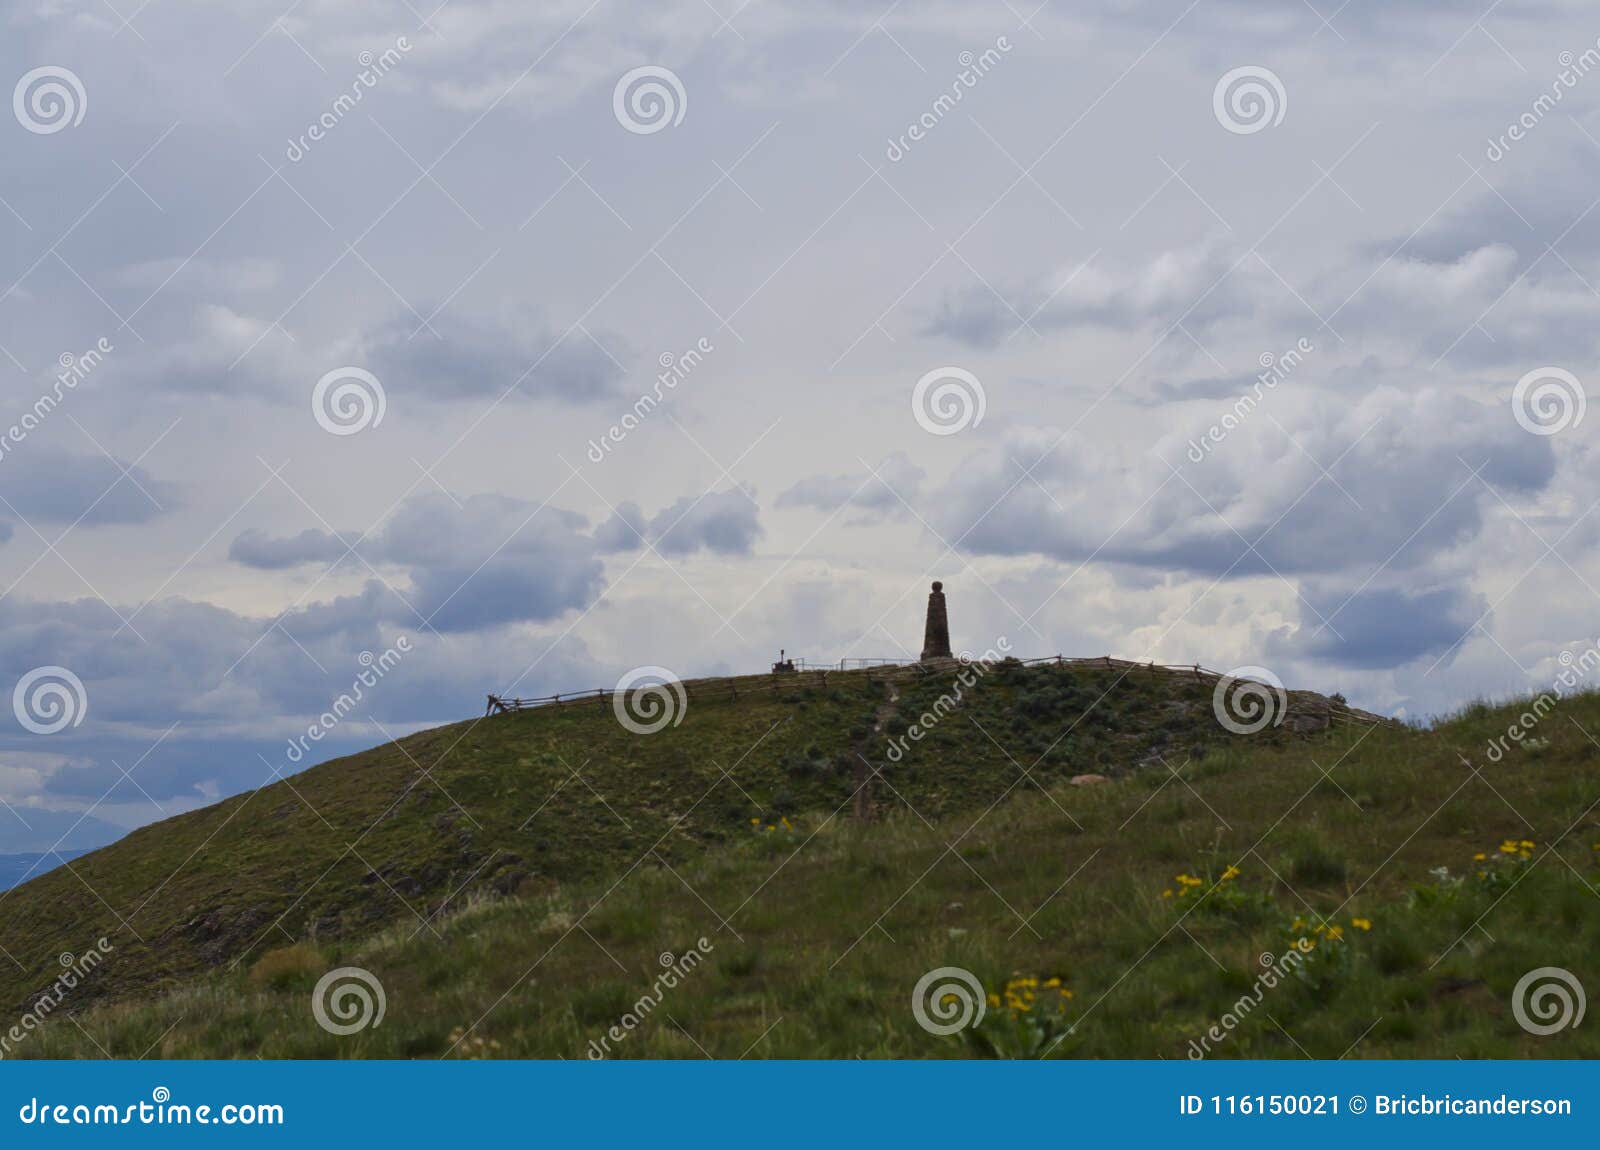 the kolob statue on top of ensign peak